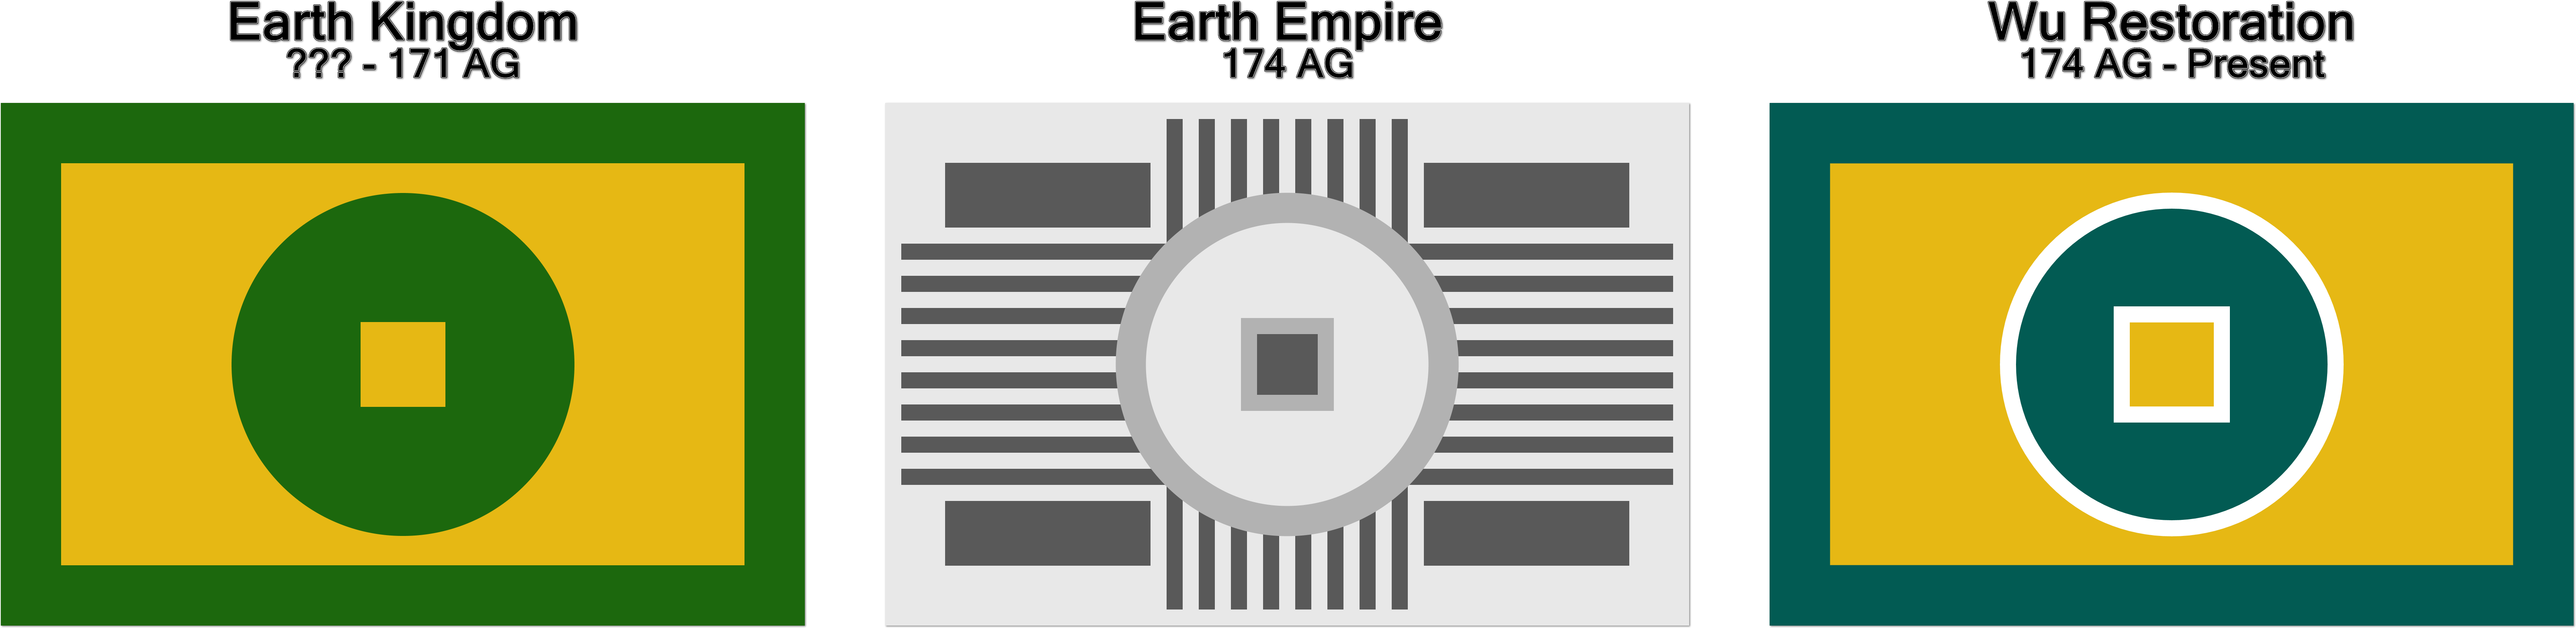 Earth kingdom alternative flags (from Avatar) in 2023